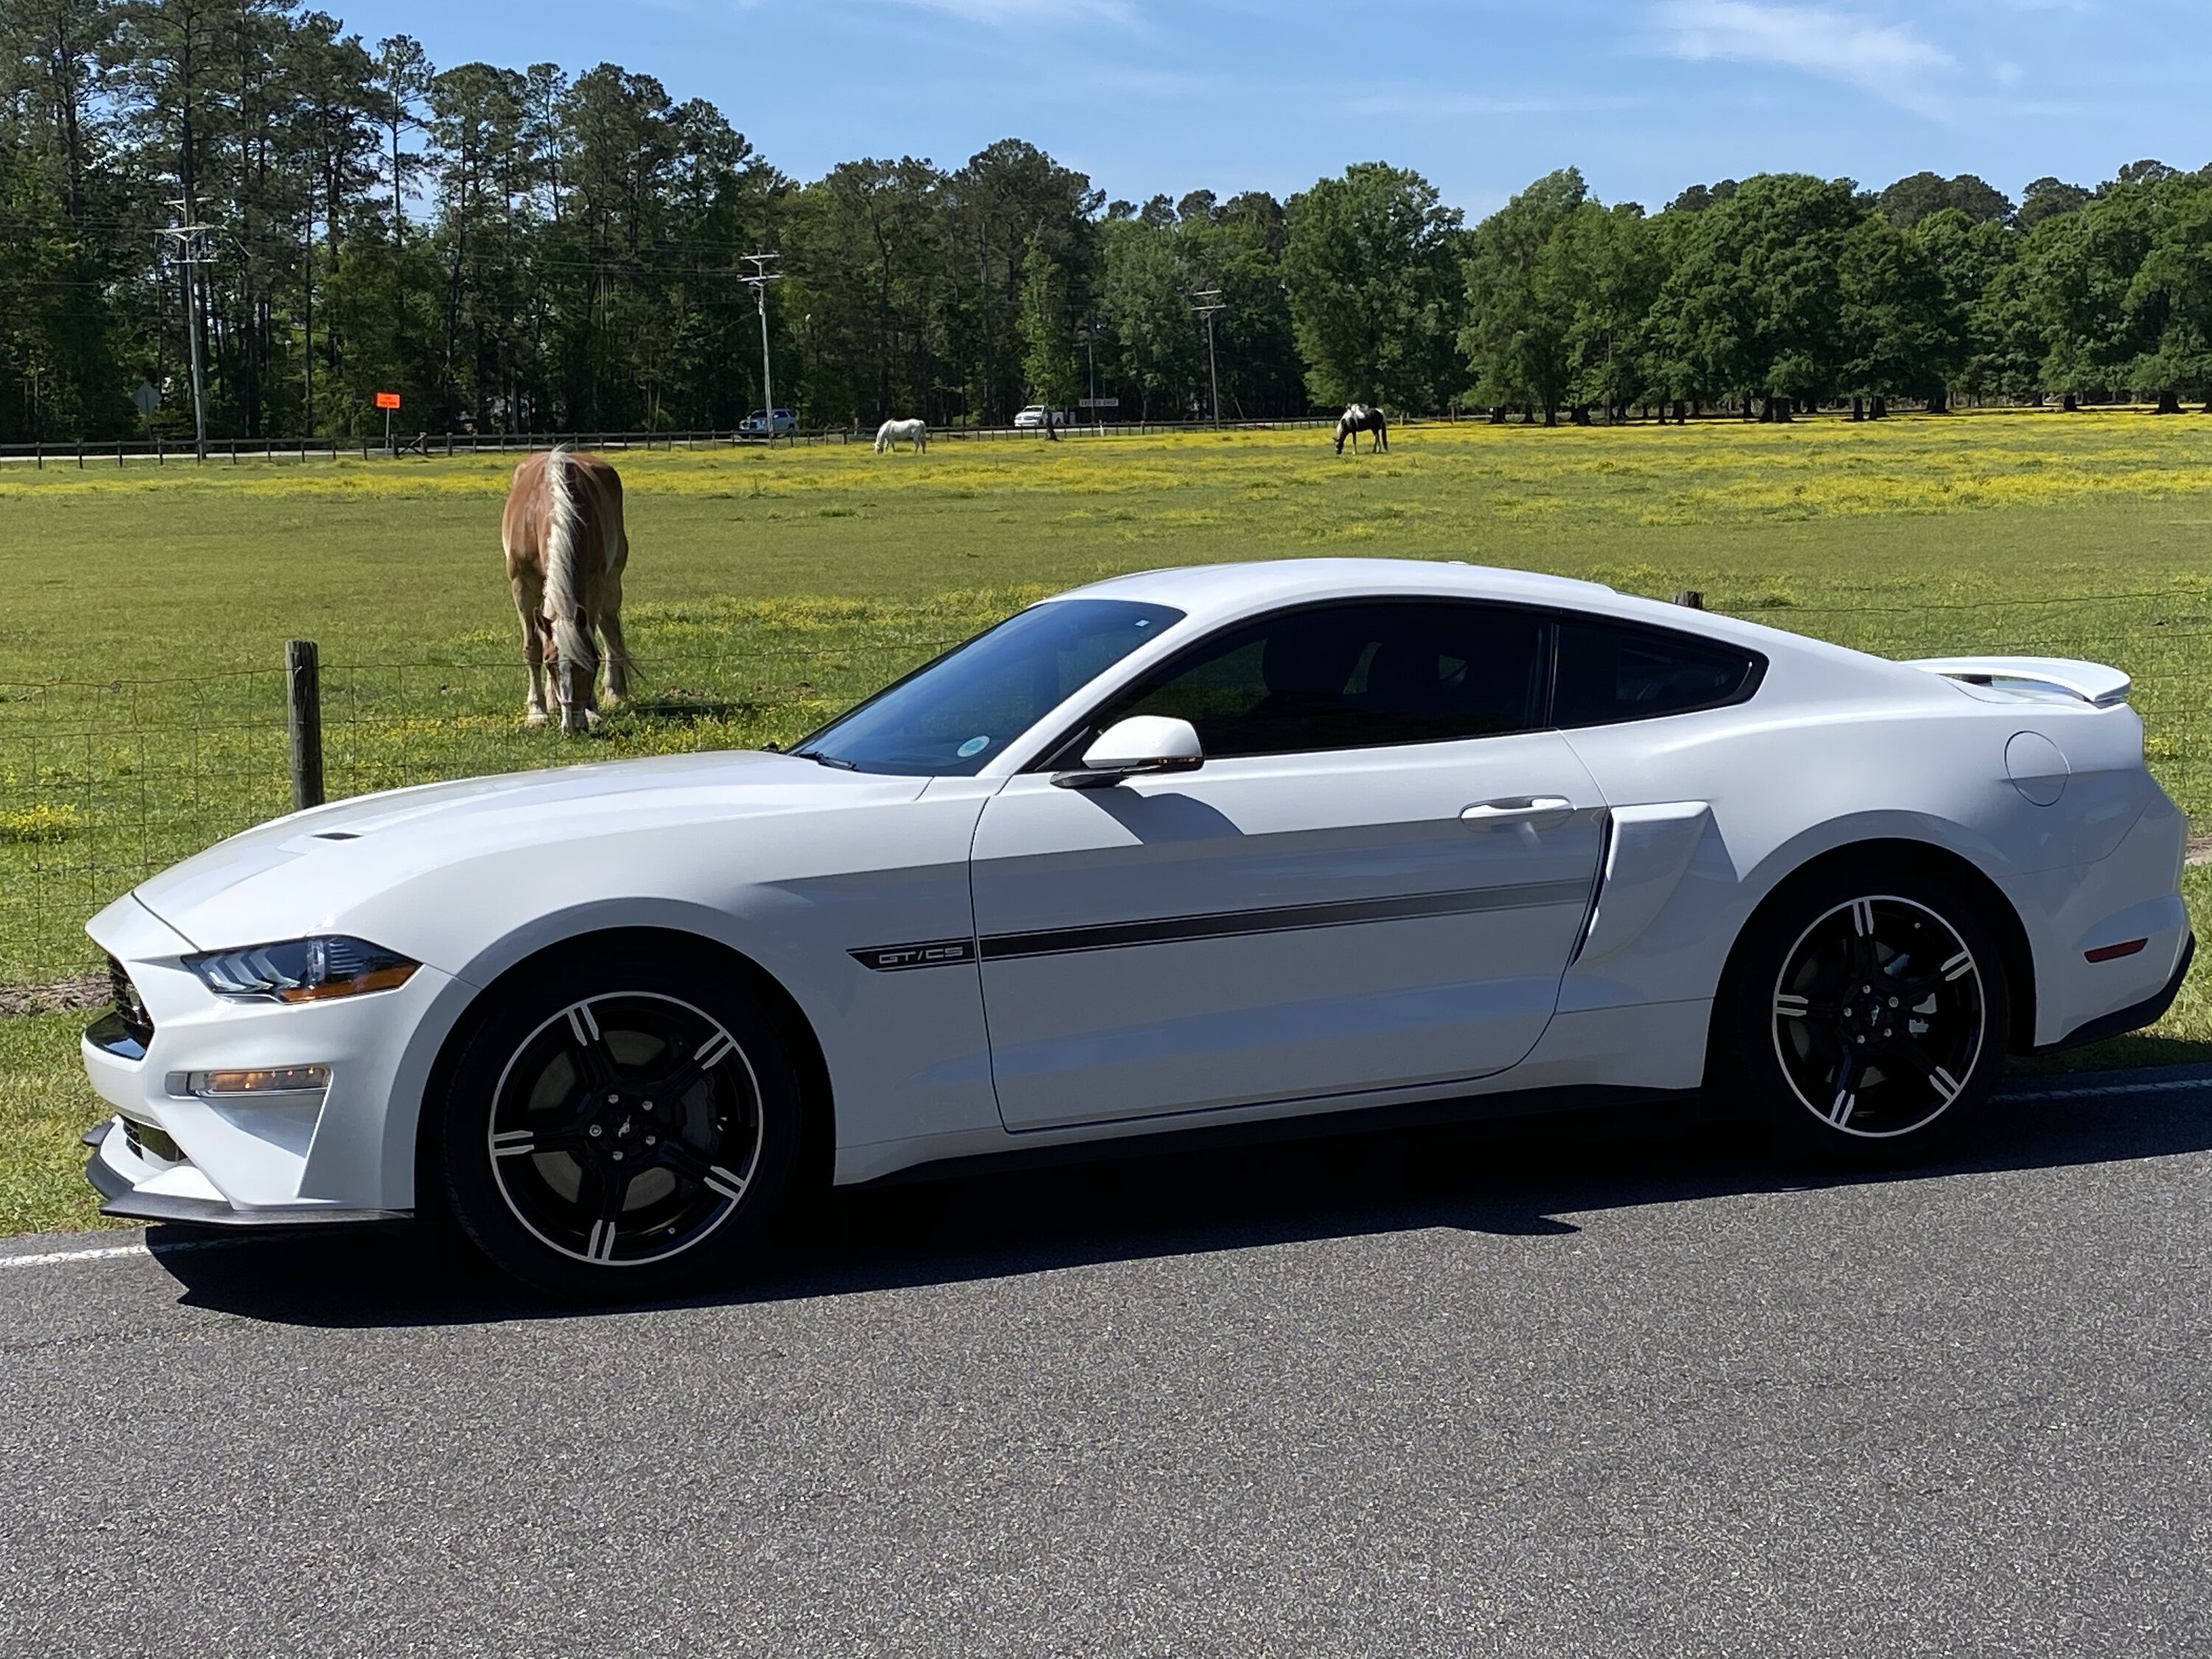 S650 Mustang 24 GT/CS white/ blue wheels! uuid=00000000-0000-0000-0000-0000000112F7&library=1&type=1&mode=1&loc=true&cap=tru